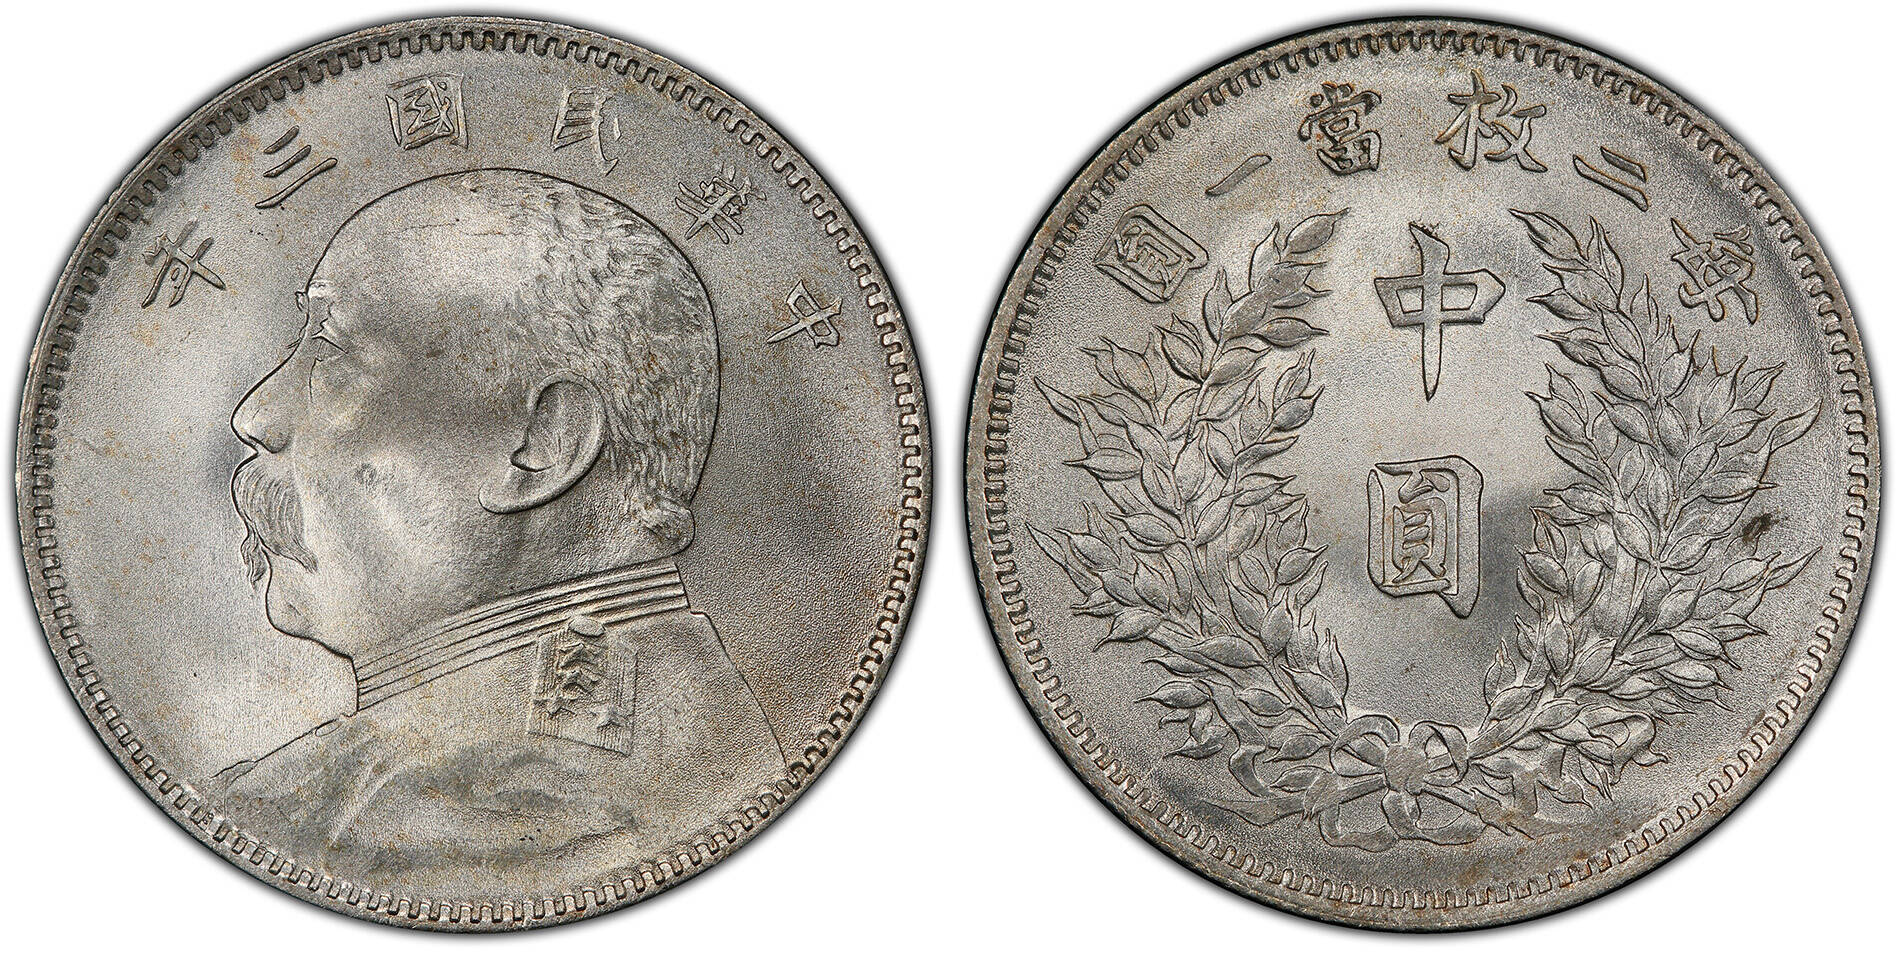 The Republic of China Yuan Shih-Kai 1914 50 Cents Coins